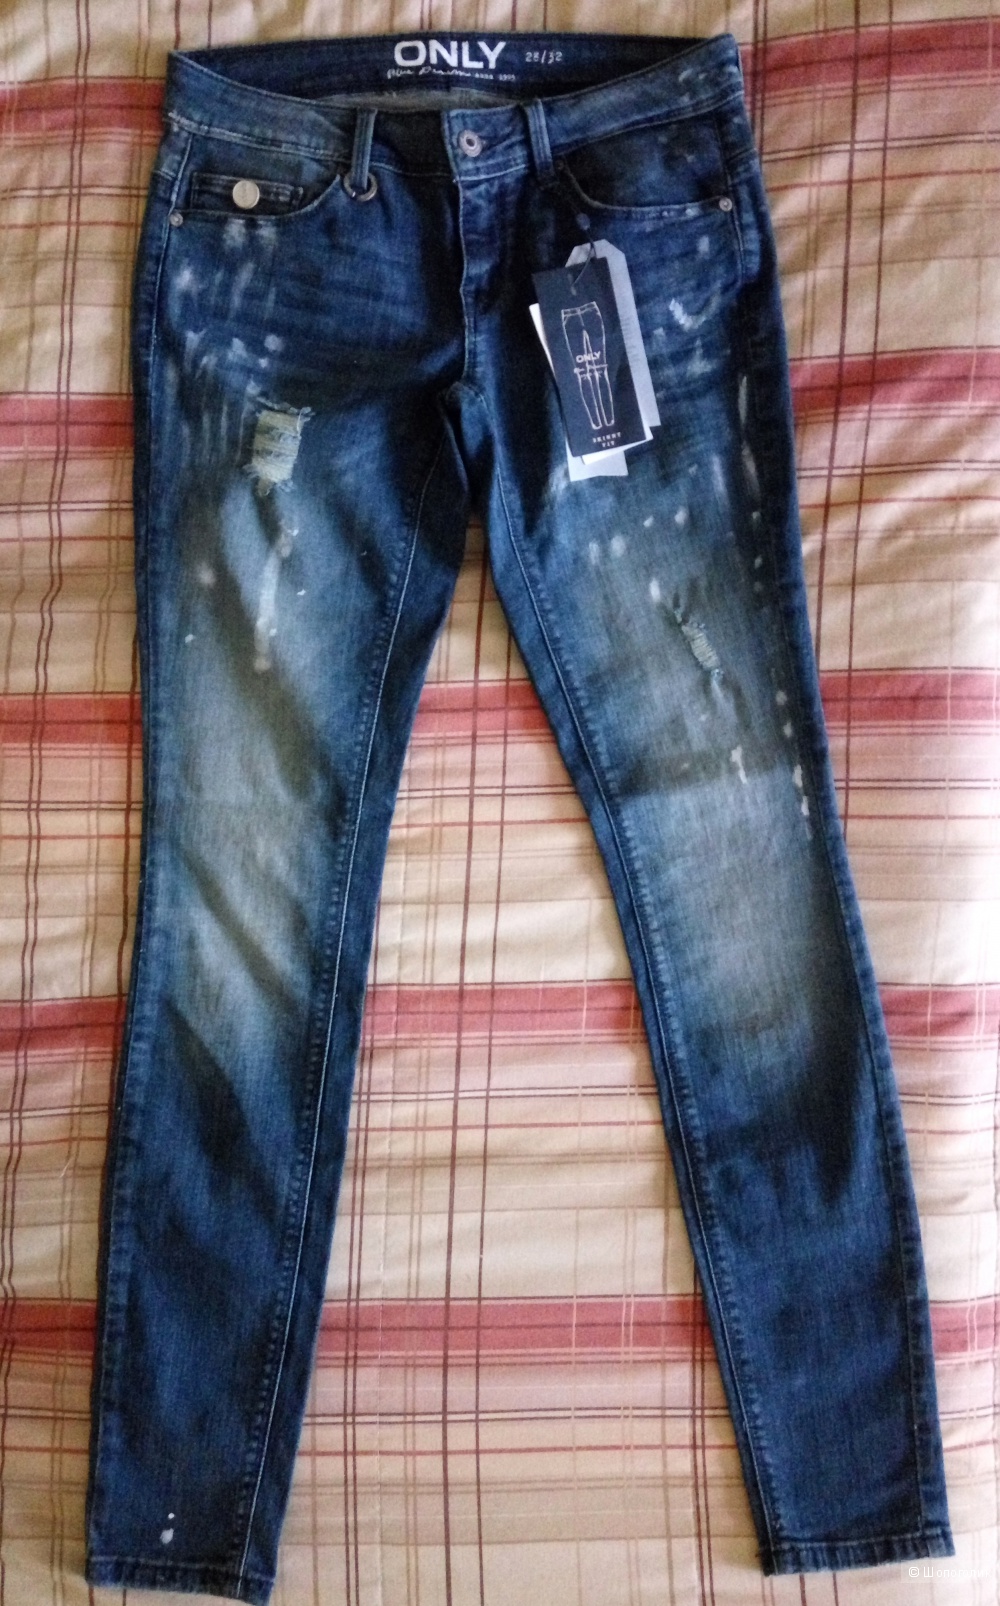 Новые  тёмно-синие джинсы скинни Only Coral от Only (28/32)